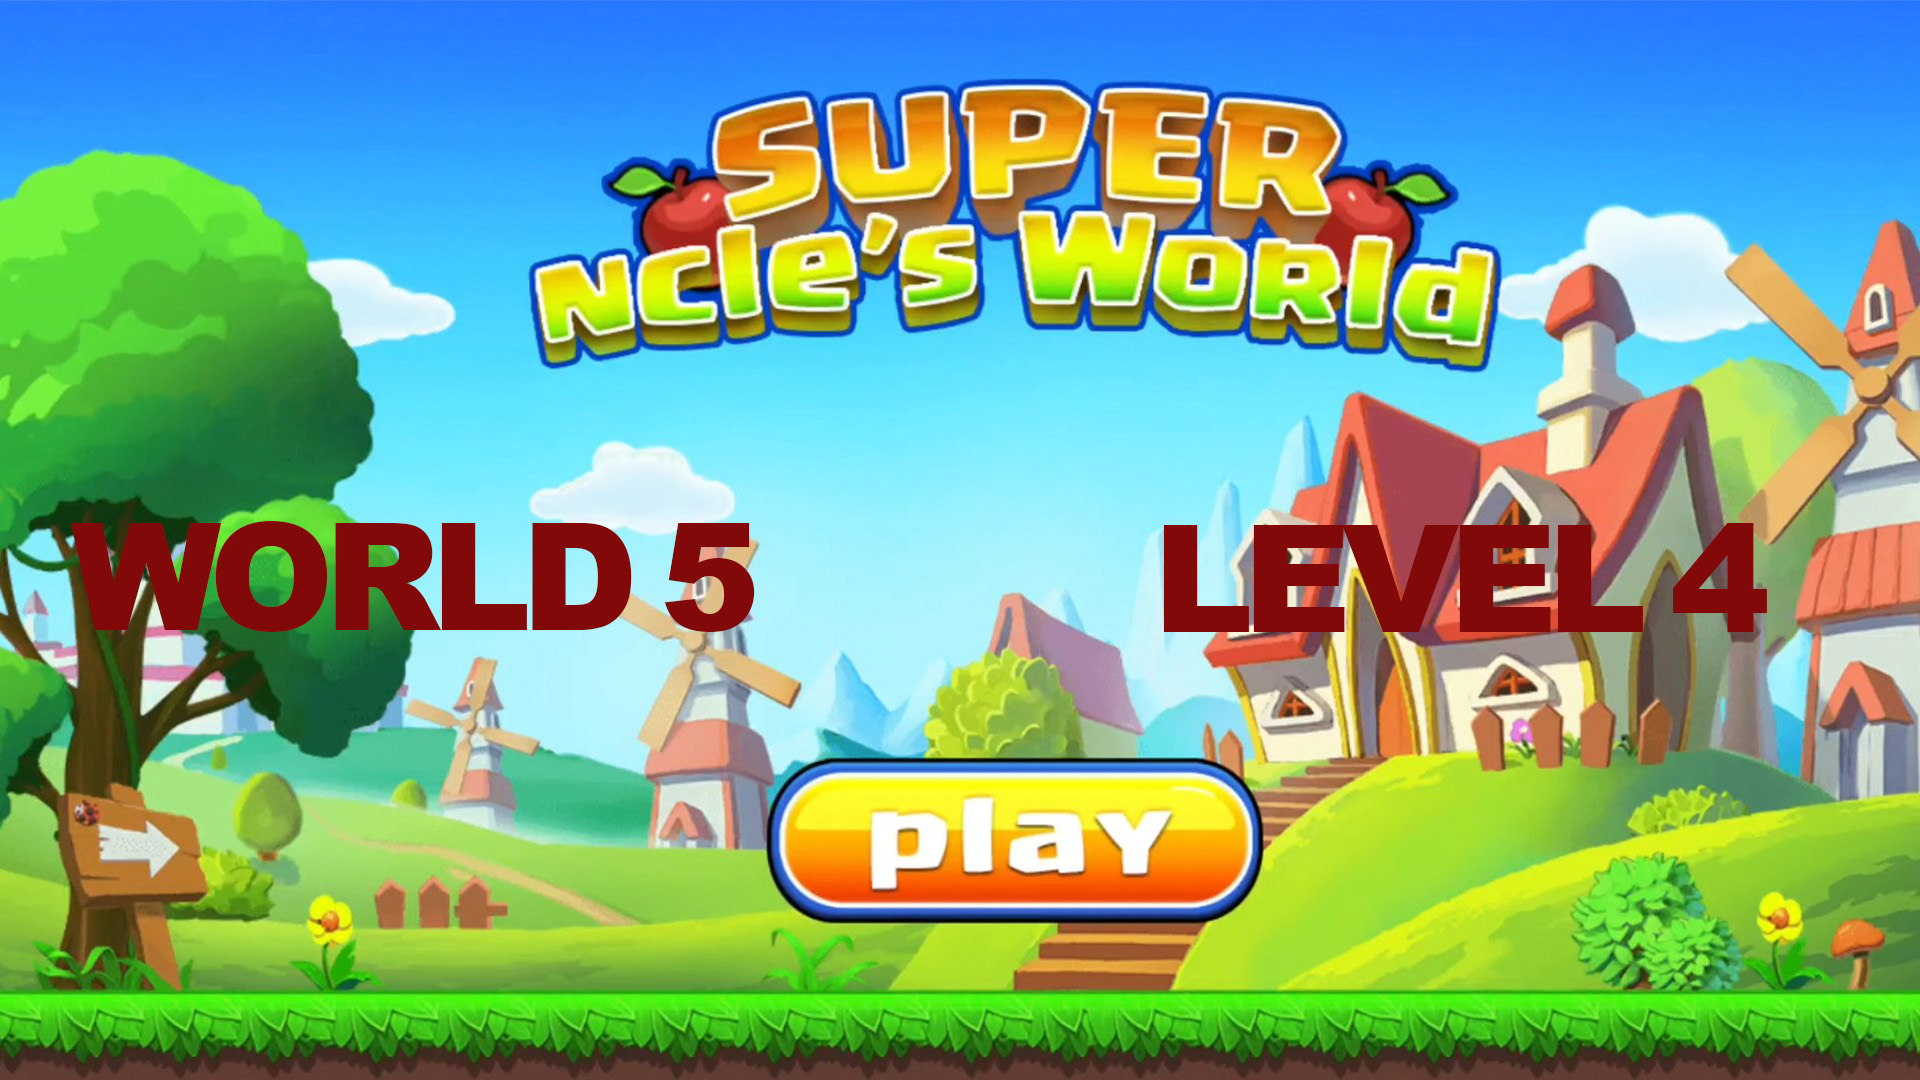 Super ncle's  World 5. Level 4.